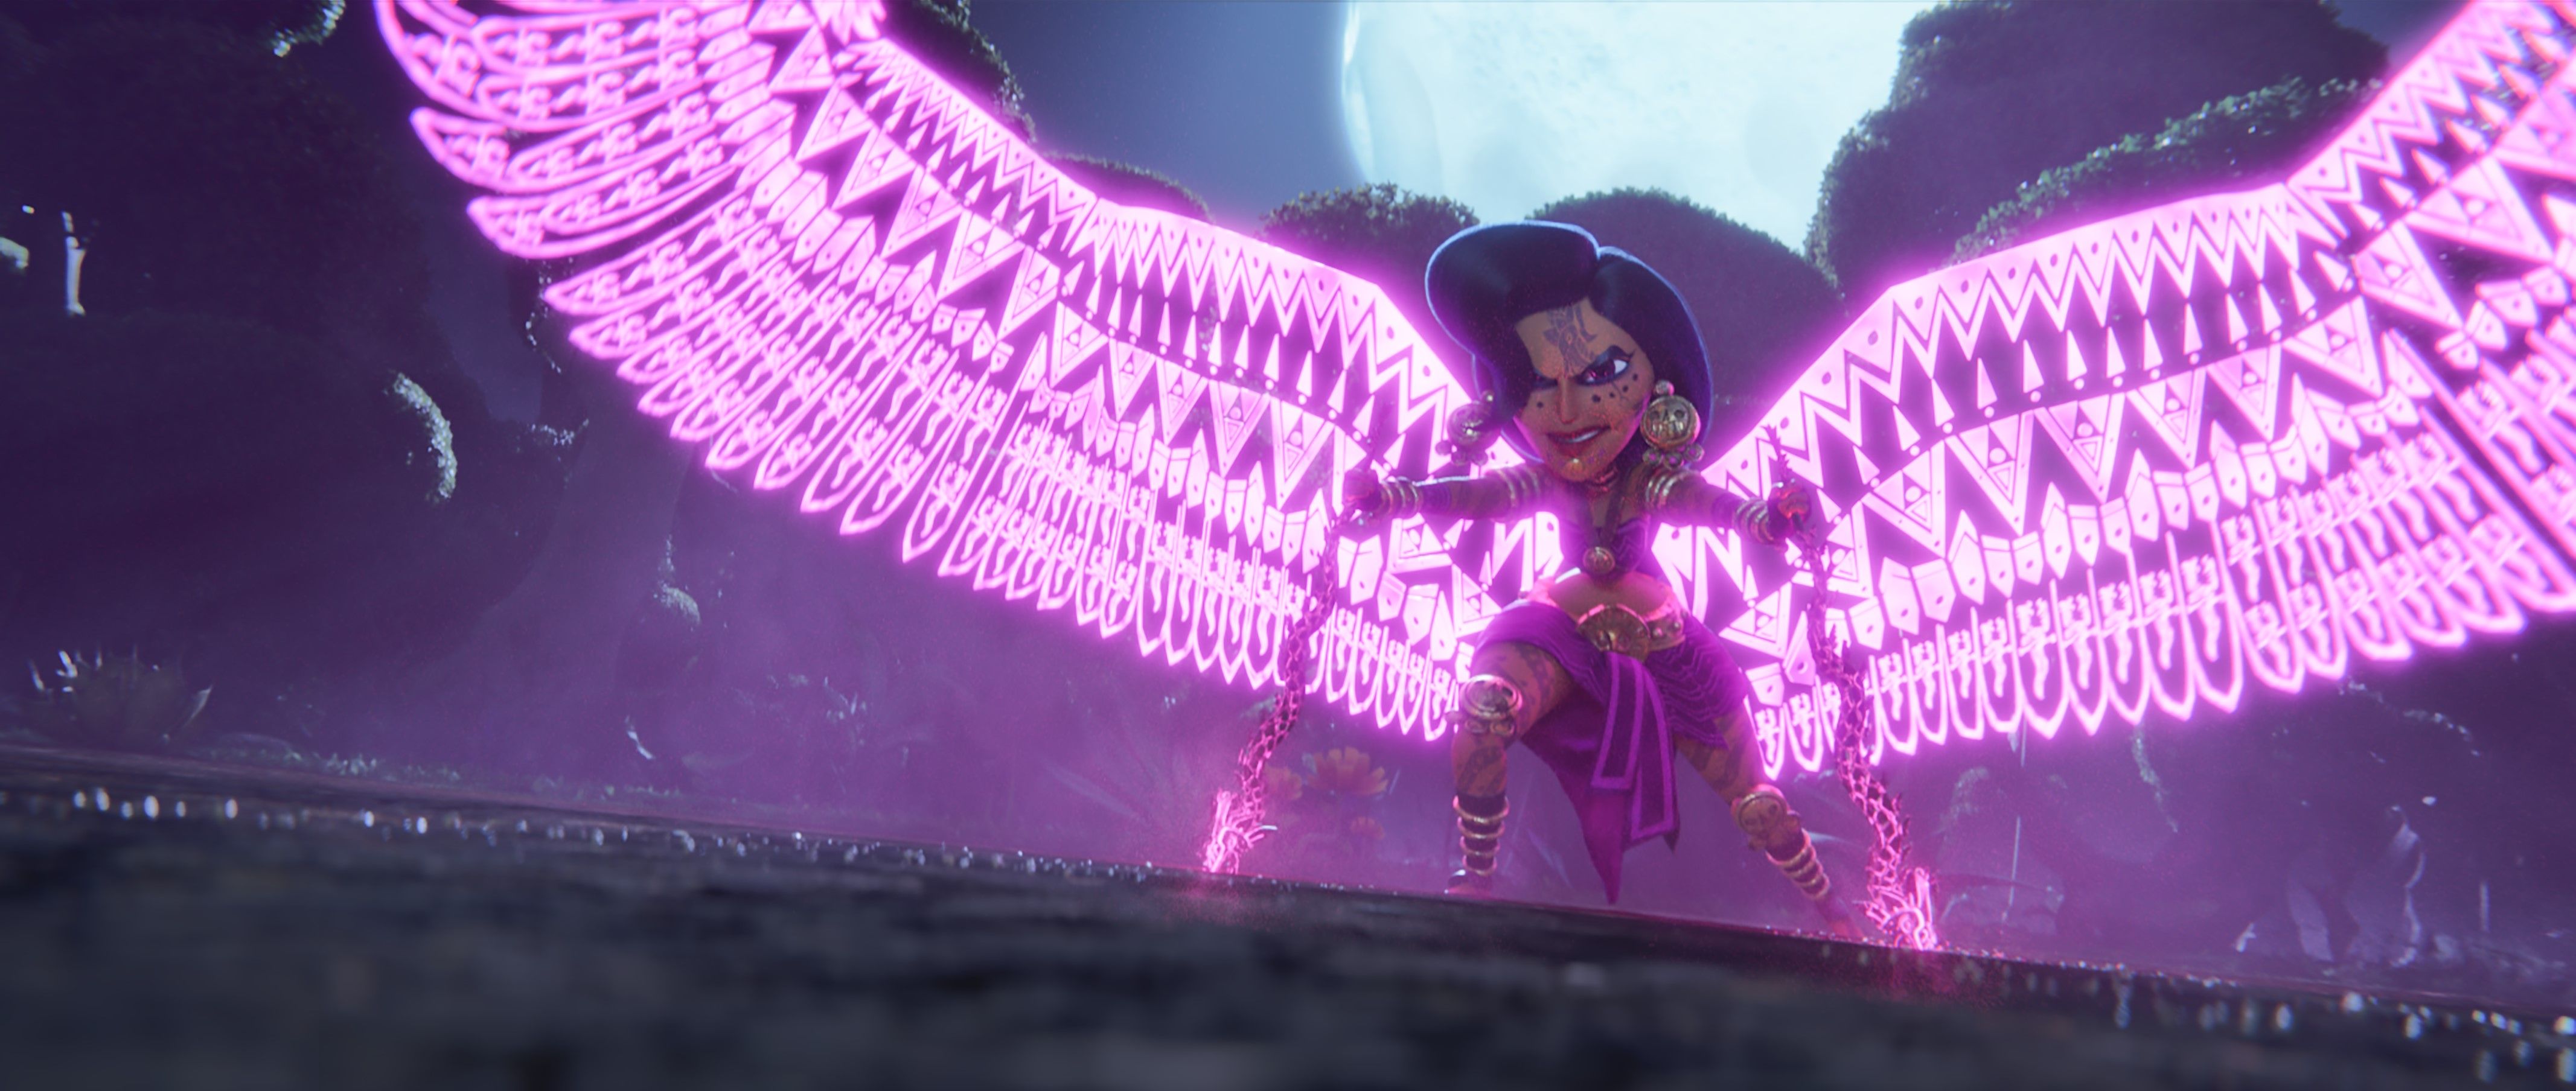 Maya and the Three Trailer Reveals Netflix Animated Movie Epic